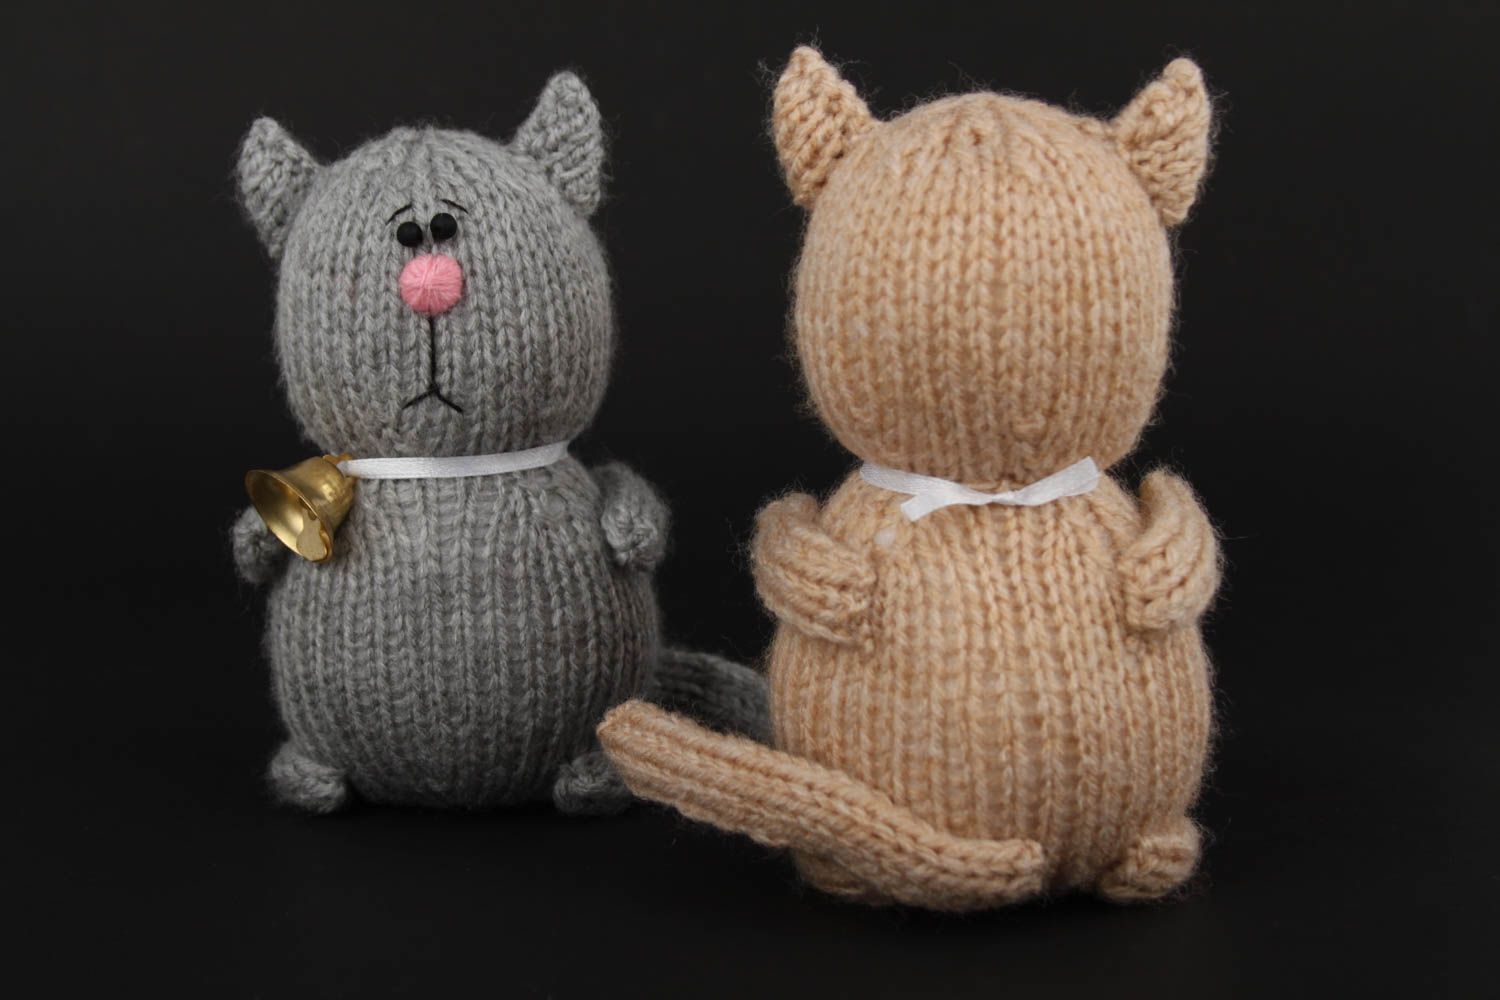 Handmade cute knitted toys 2 beautiful soft toys cats nursery decor ideas photo 4